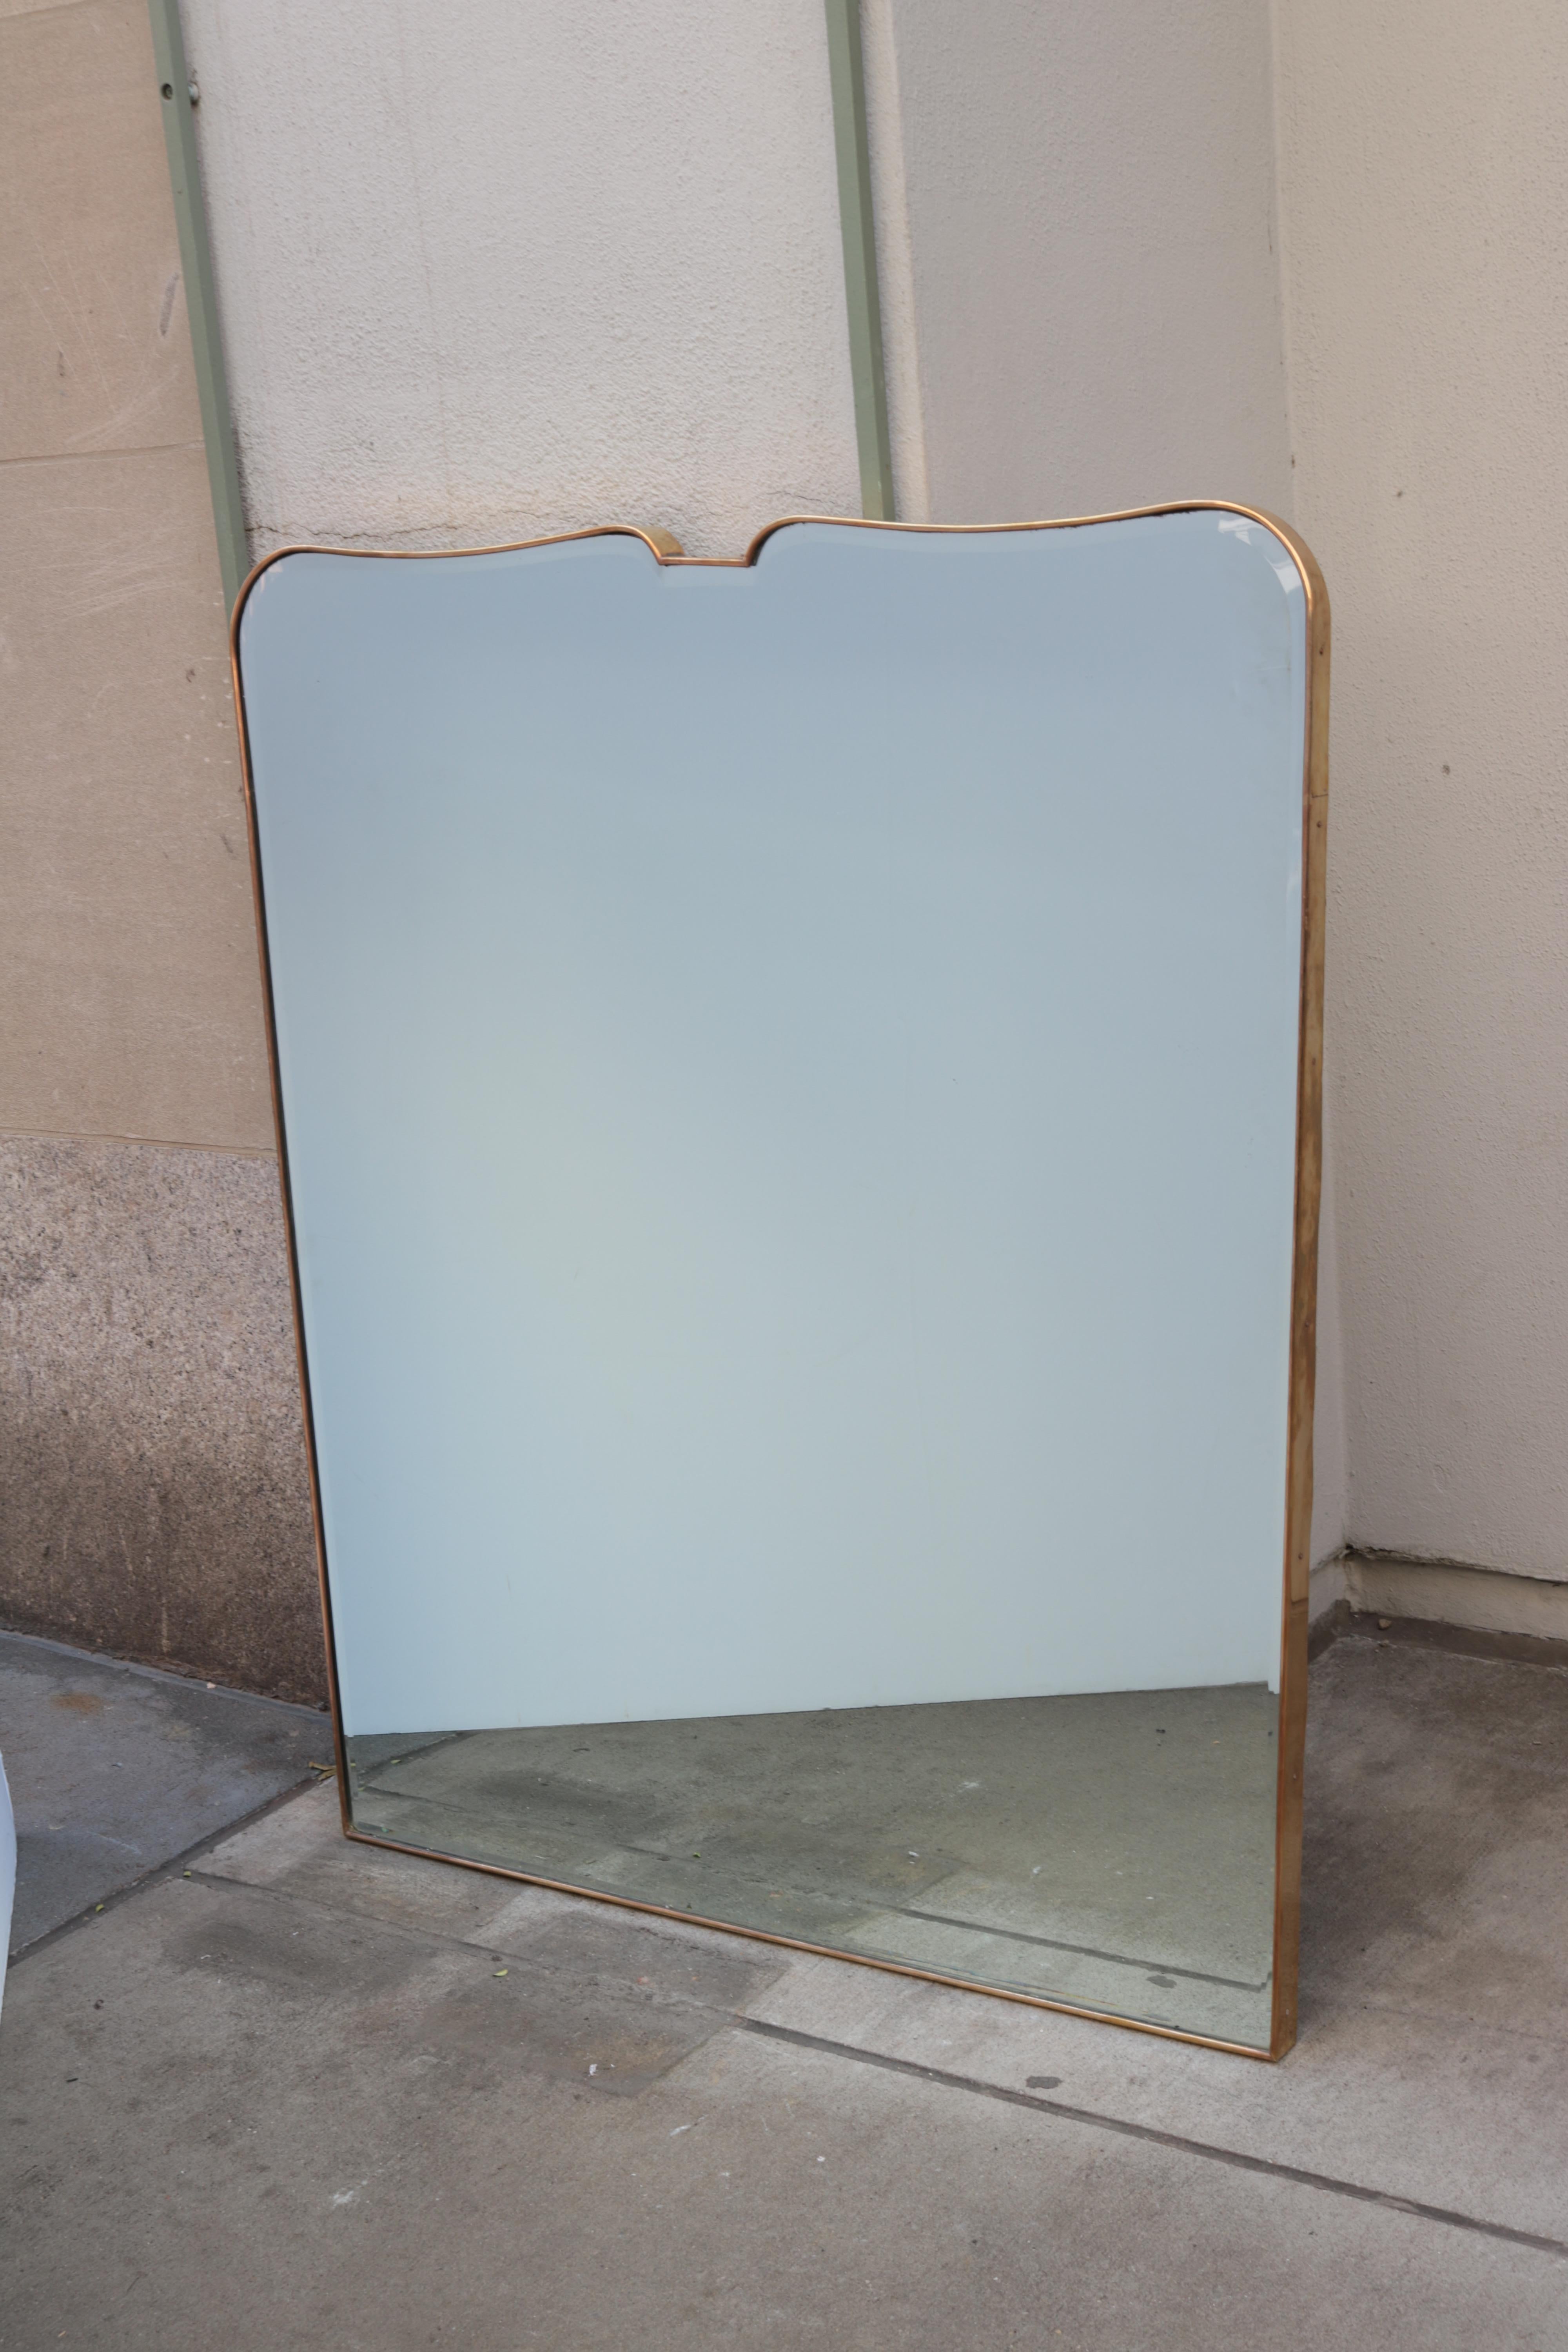 An Italian Mid-Century Modernist wall mirror. 
Brass frame with original beveled edge mirror.